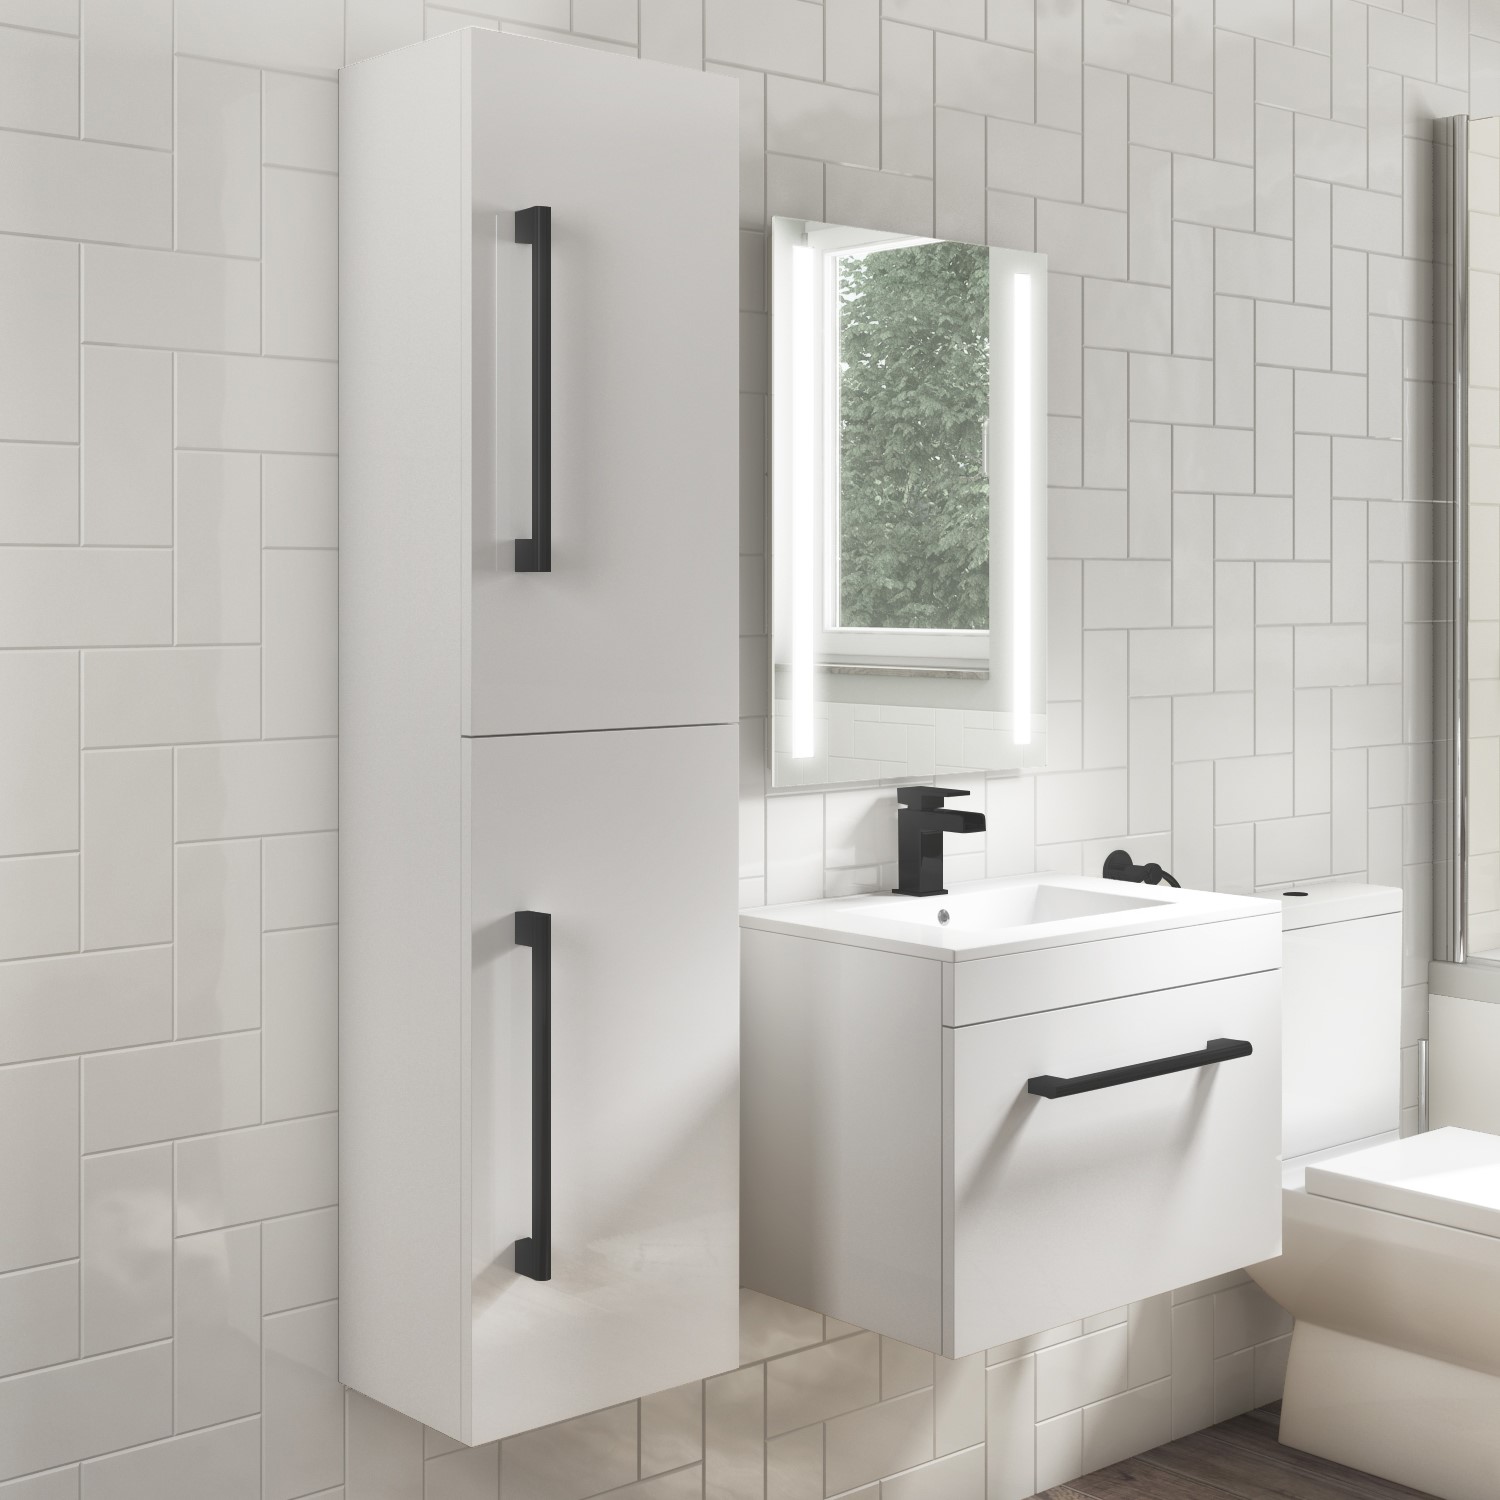 350mm White  Wall Hung Tall Bathroom Cabinet with Chrome Handles - Ashford